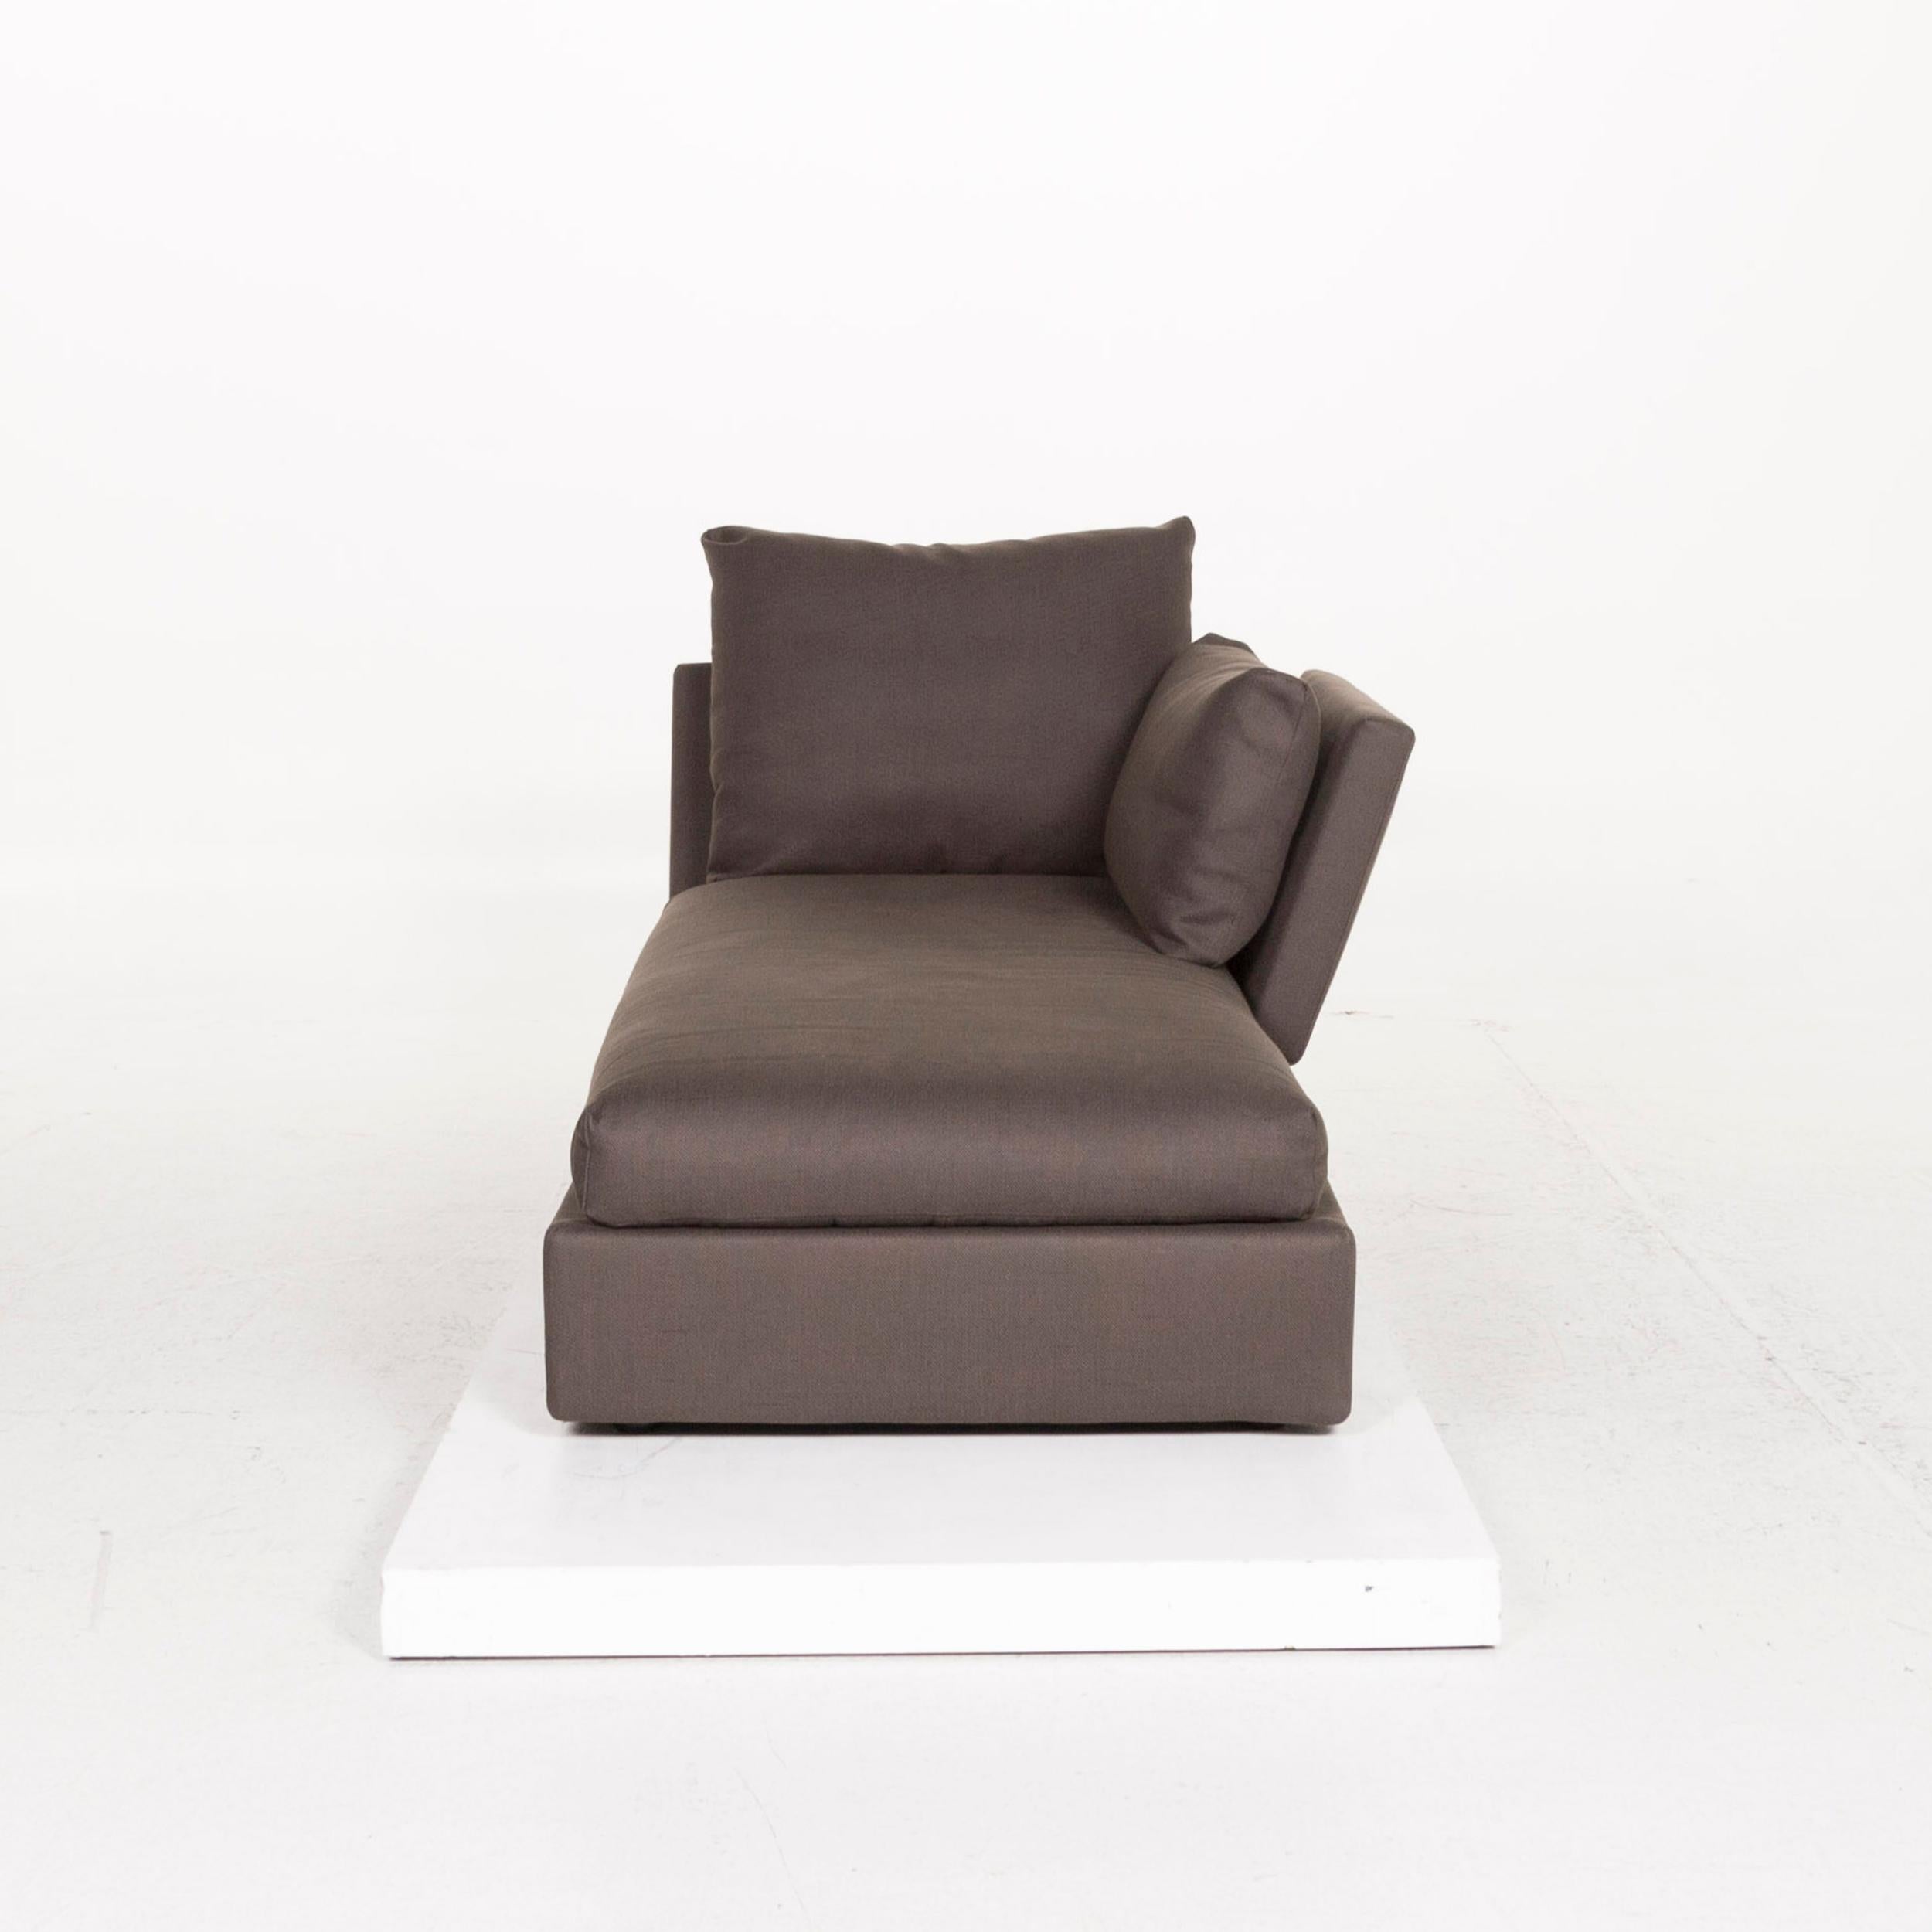 Flexform Fabric Sofa Brown Dark Brown Two-Seat Sleep Function Function Couch 1